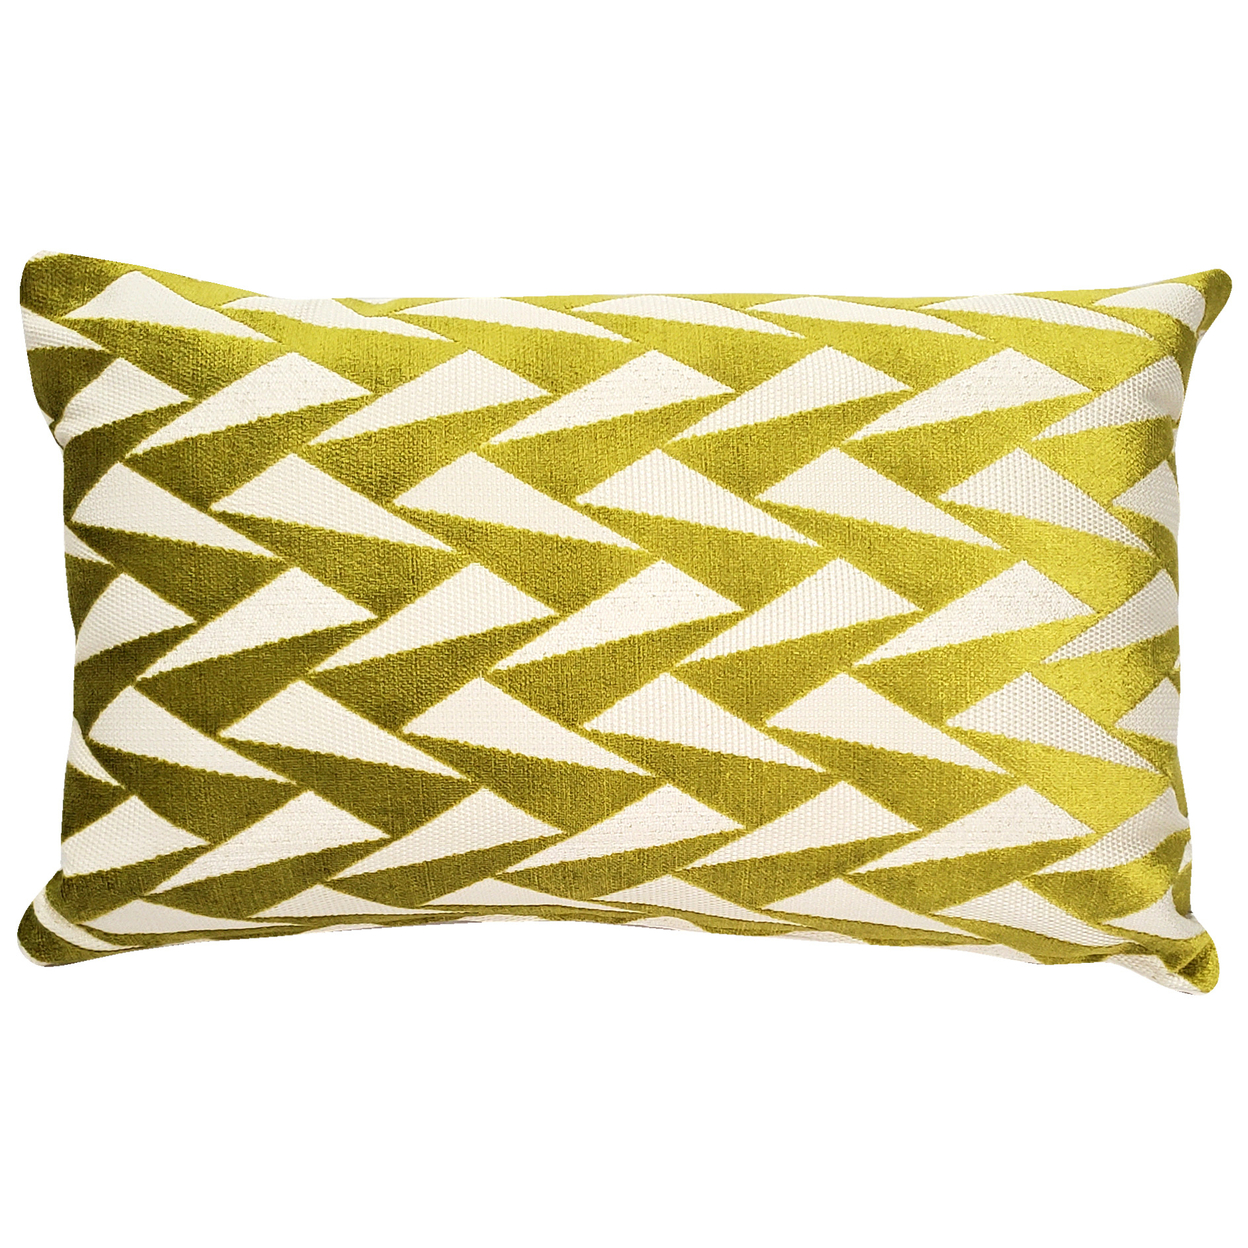 Nouveau Chartreuse Velvet Throw Pillow 12x19, With Polyfill Insert